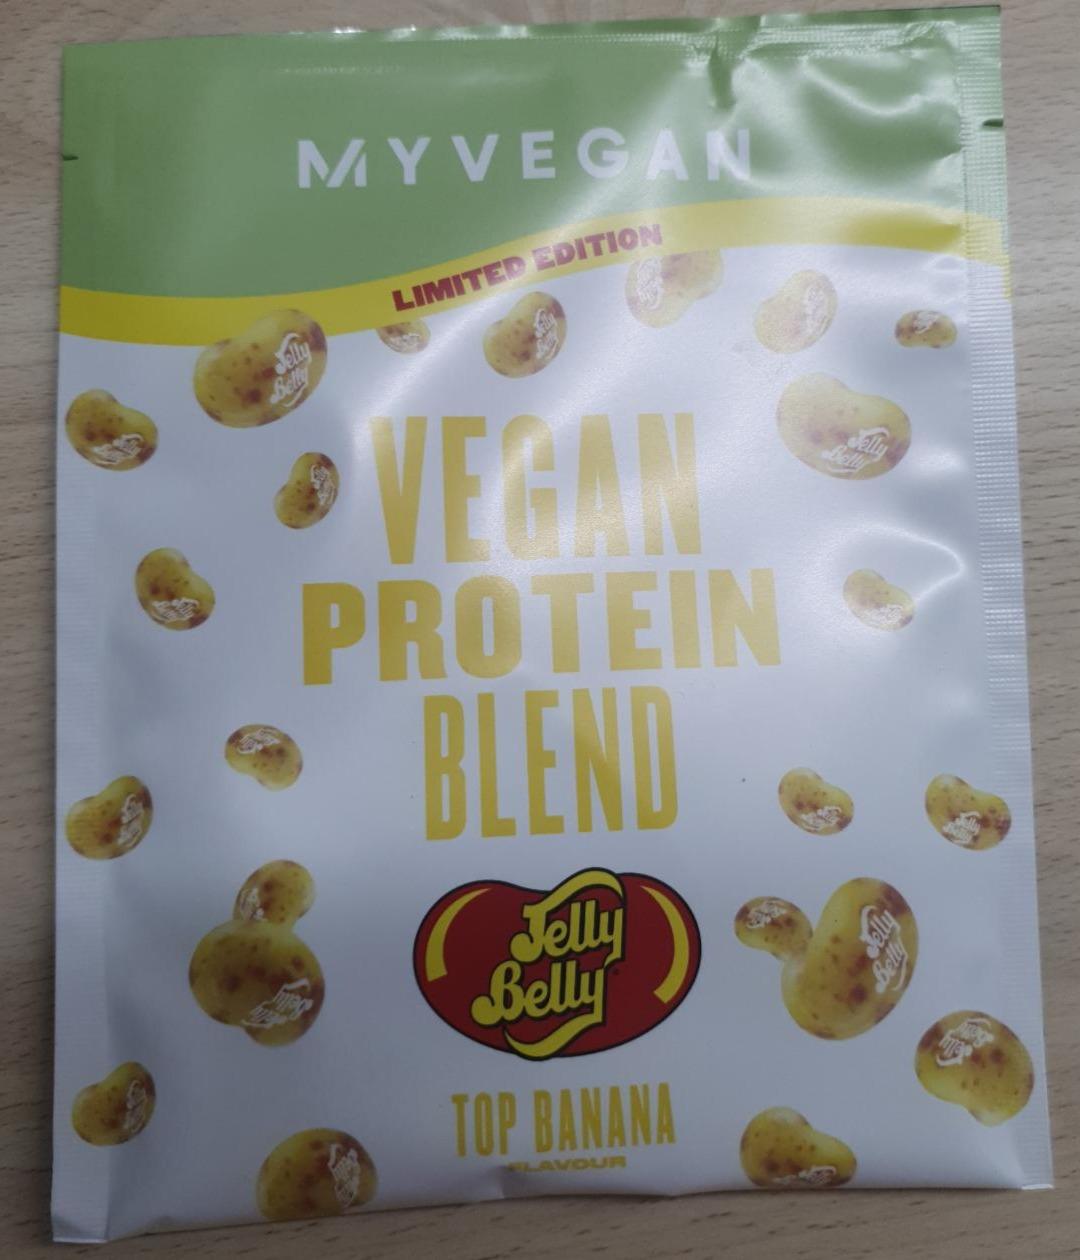 Fotografie - Vegan Protein Blend Jelly Belly Top Banana MyVegan